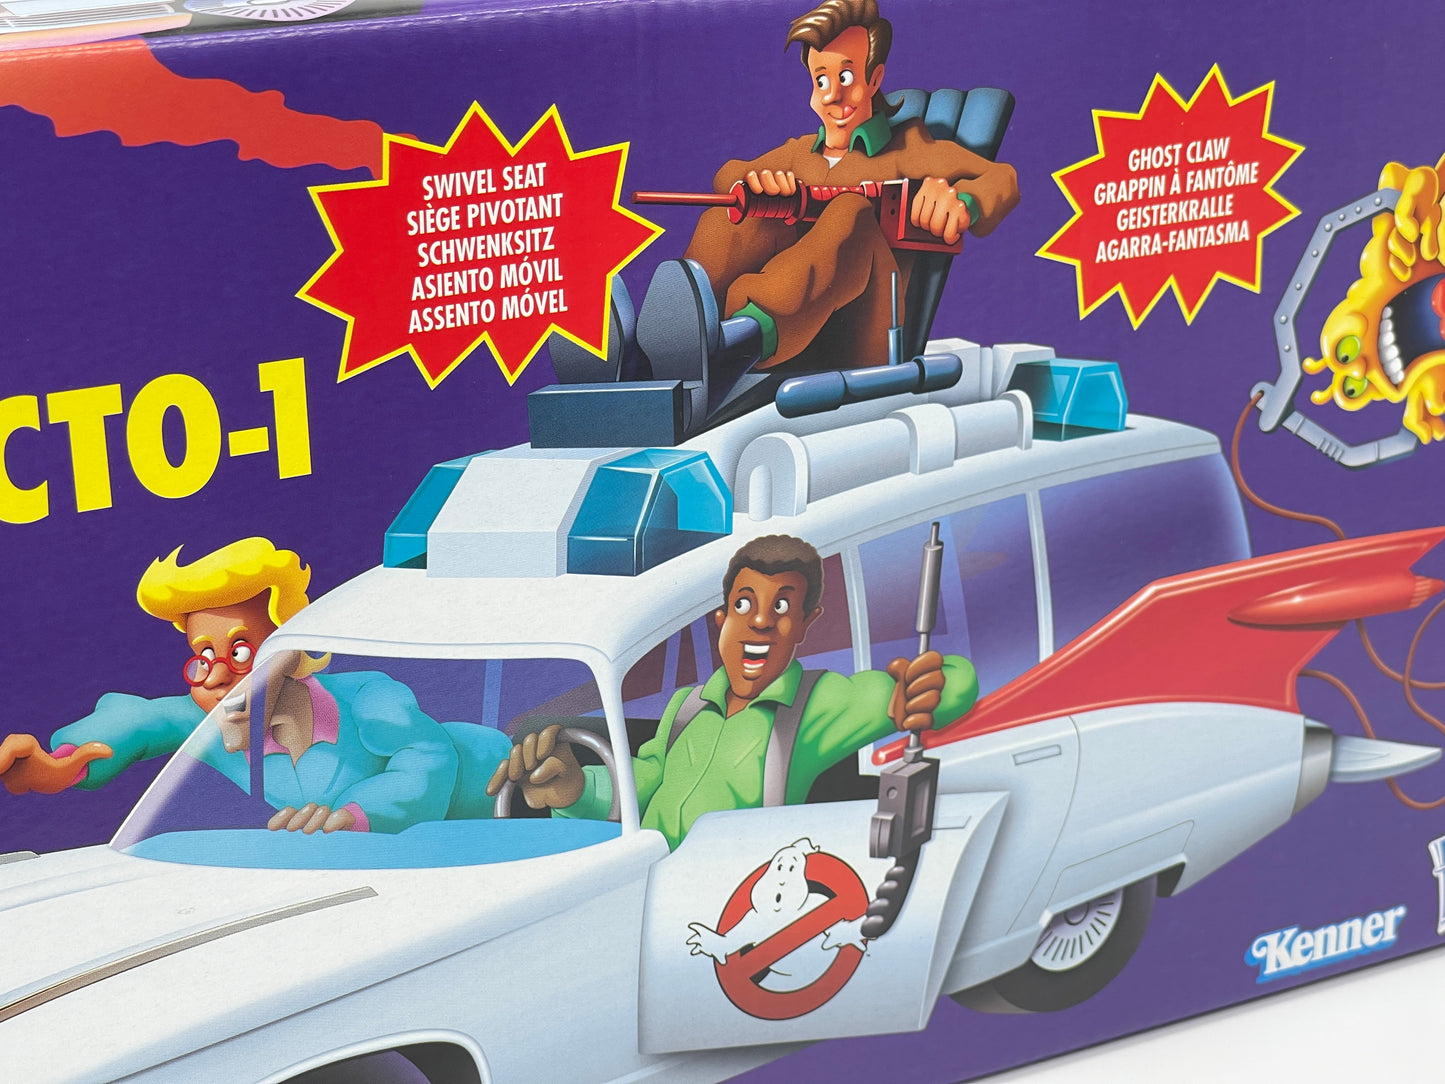 The Real Ghostbusters "Ecto-1" Fahrzeug Classics Edition Kenner / Hasbro (2021)